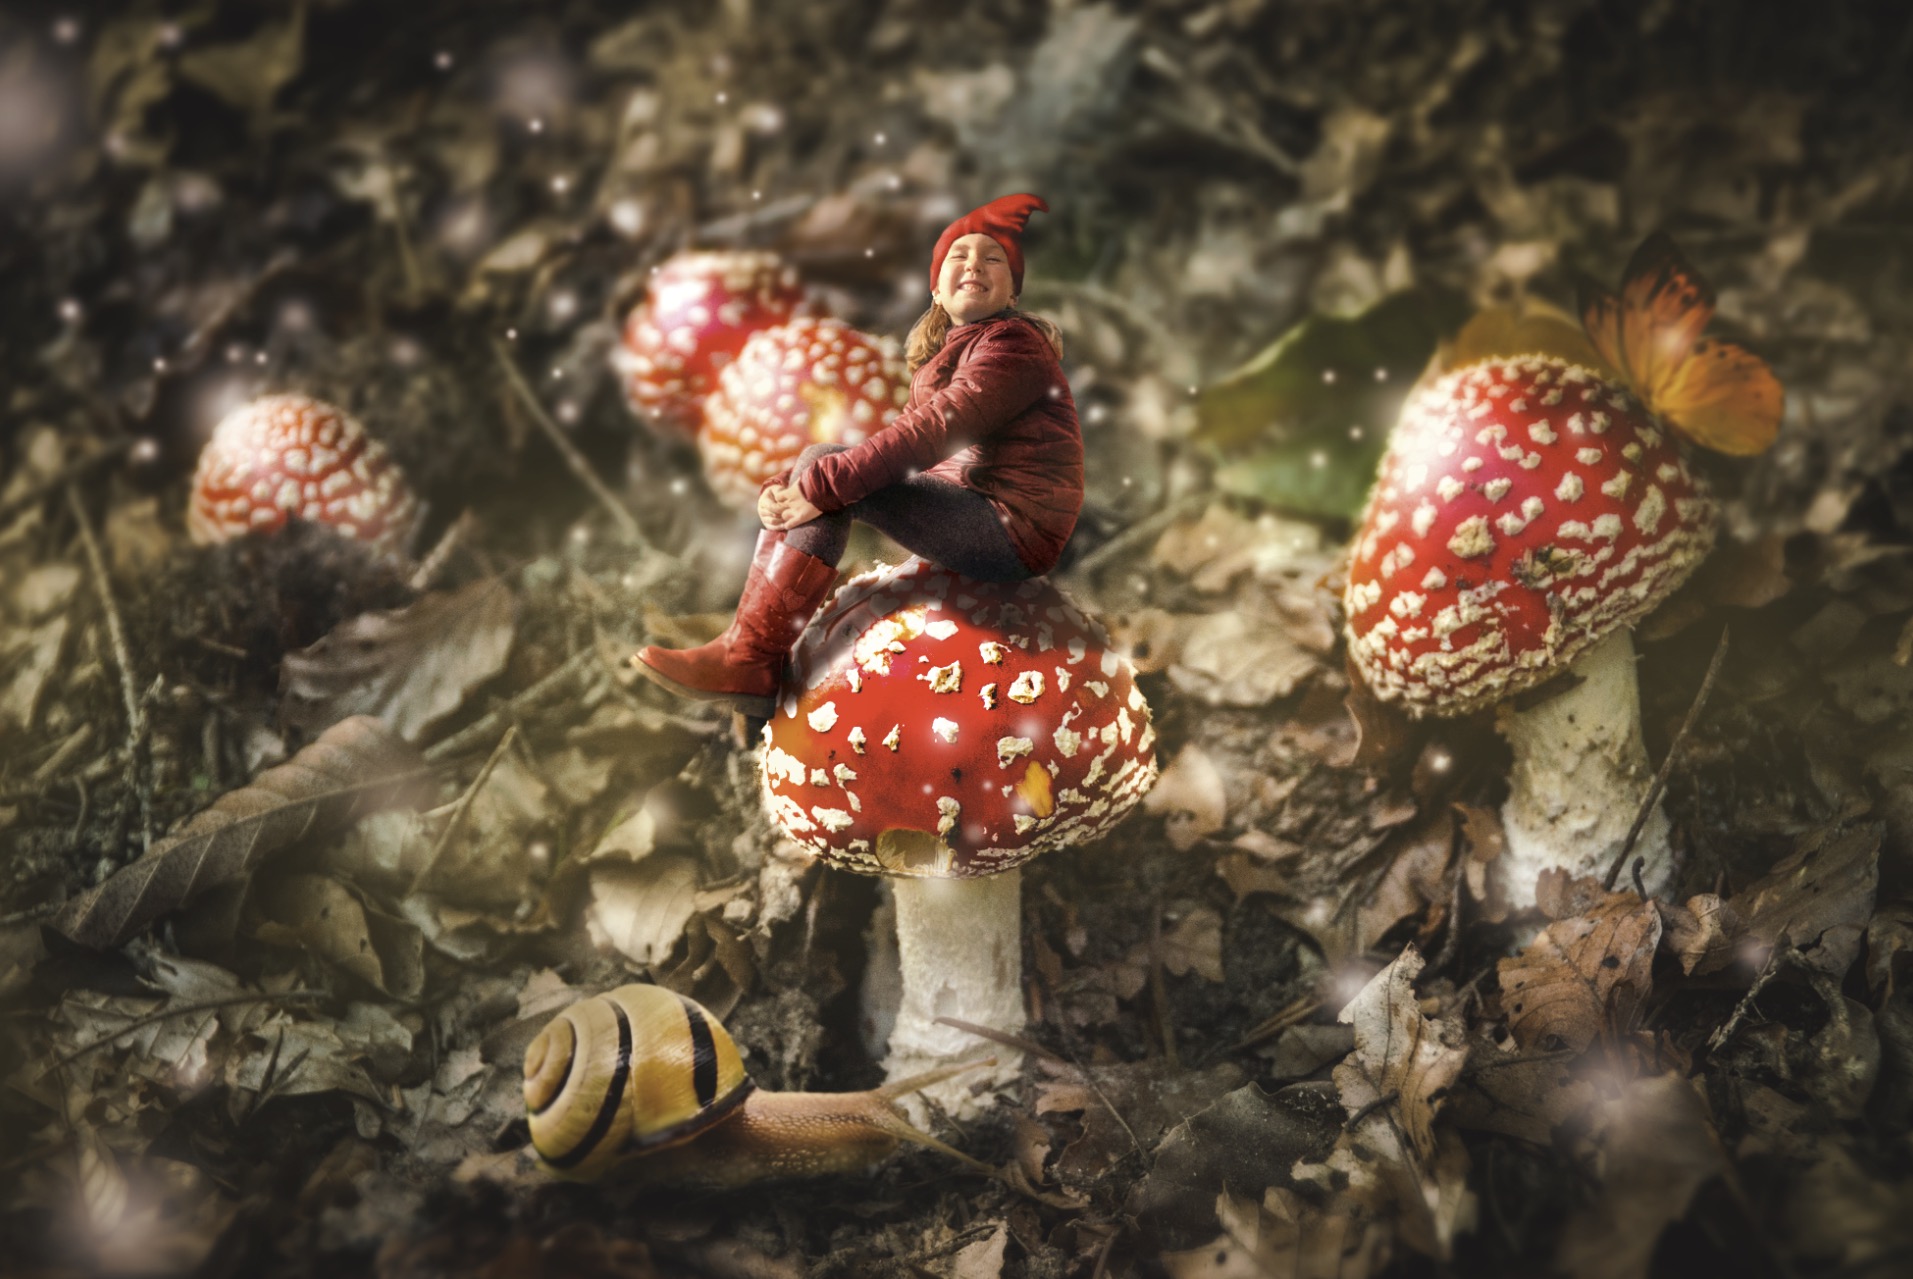 Surreal Photography - Romi the Mushroom Gnome